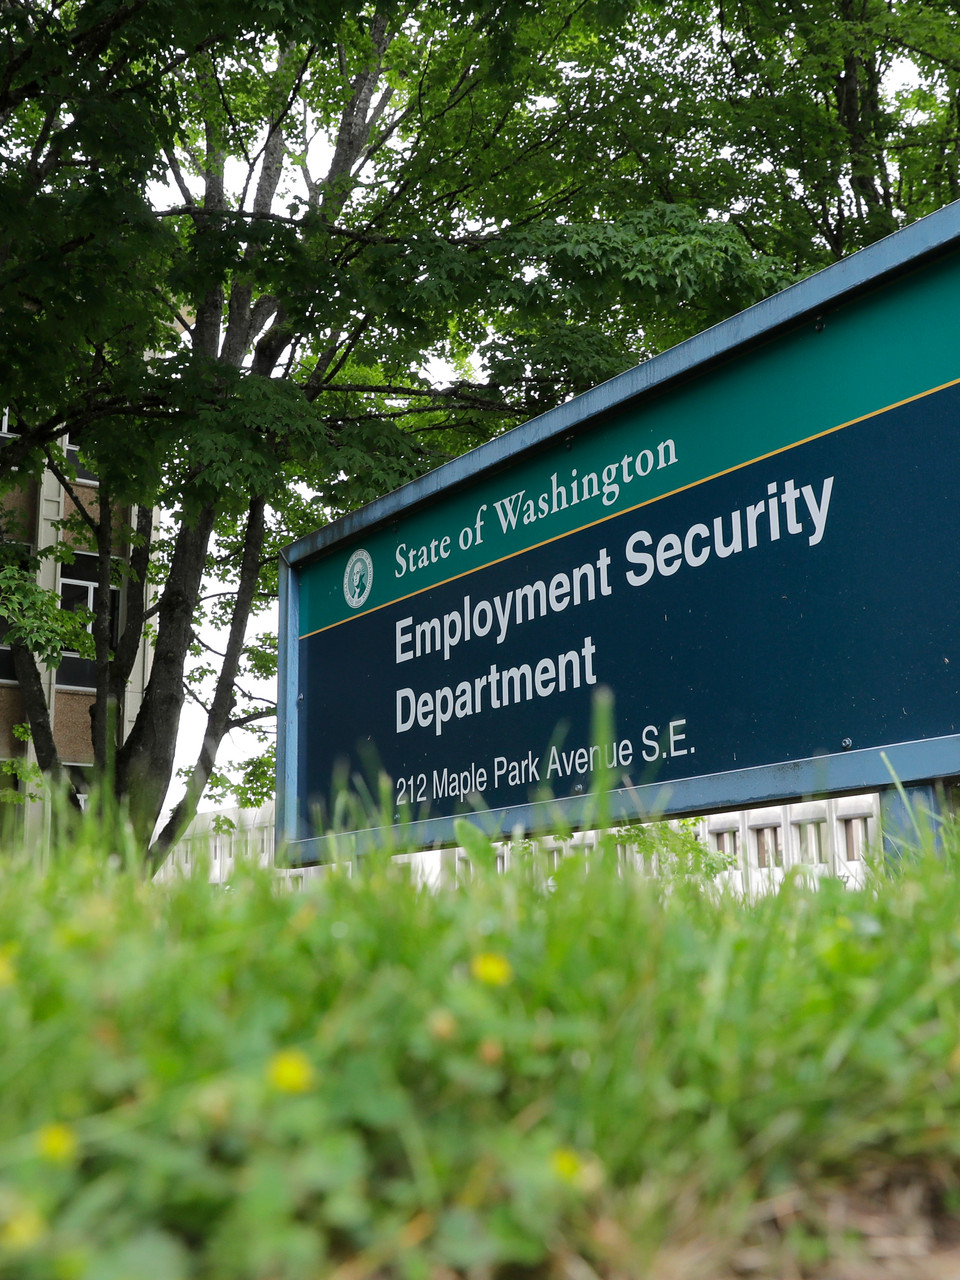 State of Washington Employment Security Department bilked by Onyegbula, Rufai